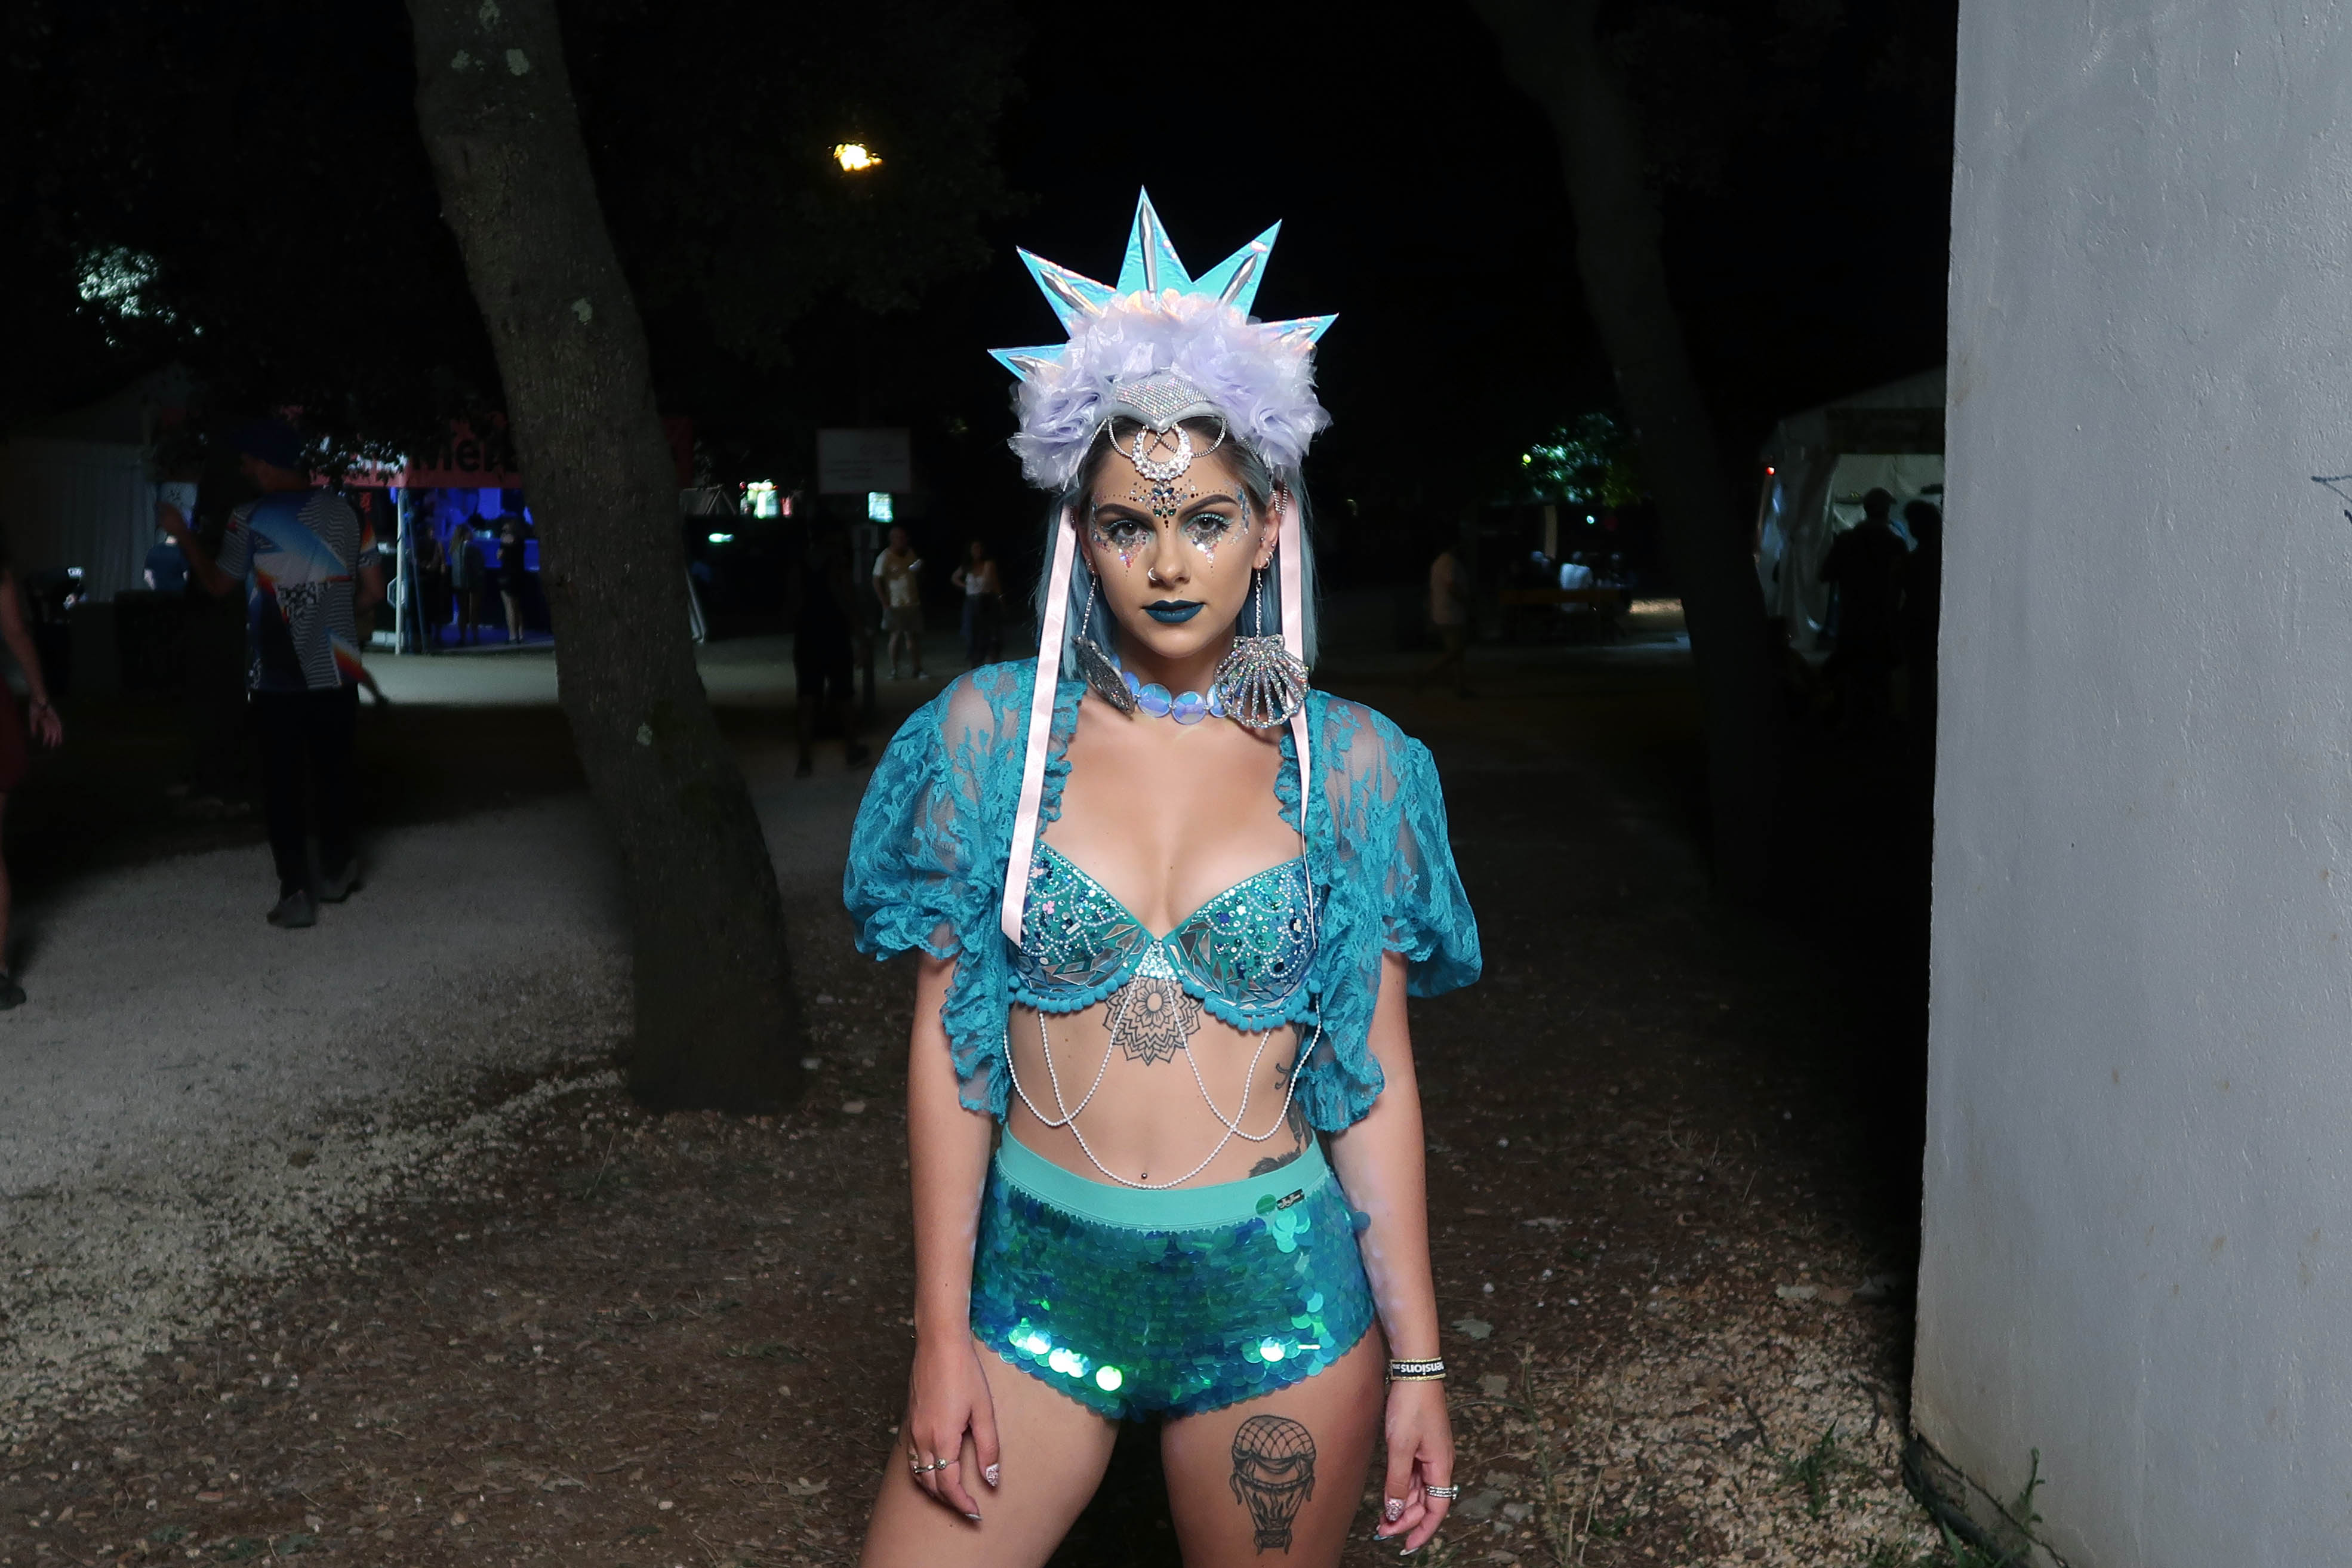 sophie hannah richardson at dimensions festival wearing mermaid rave bra